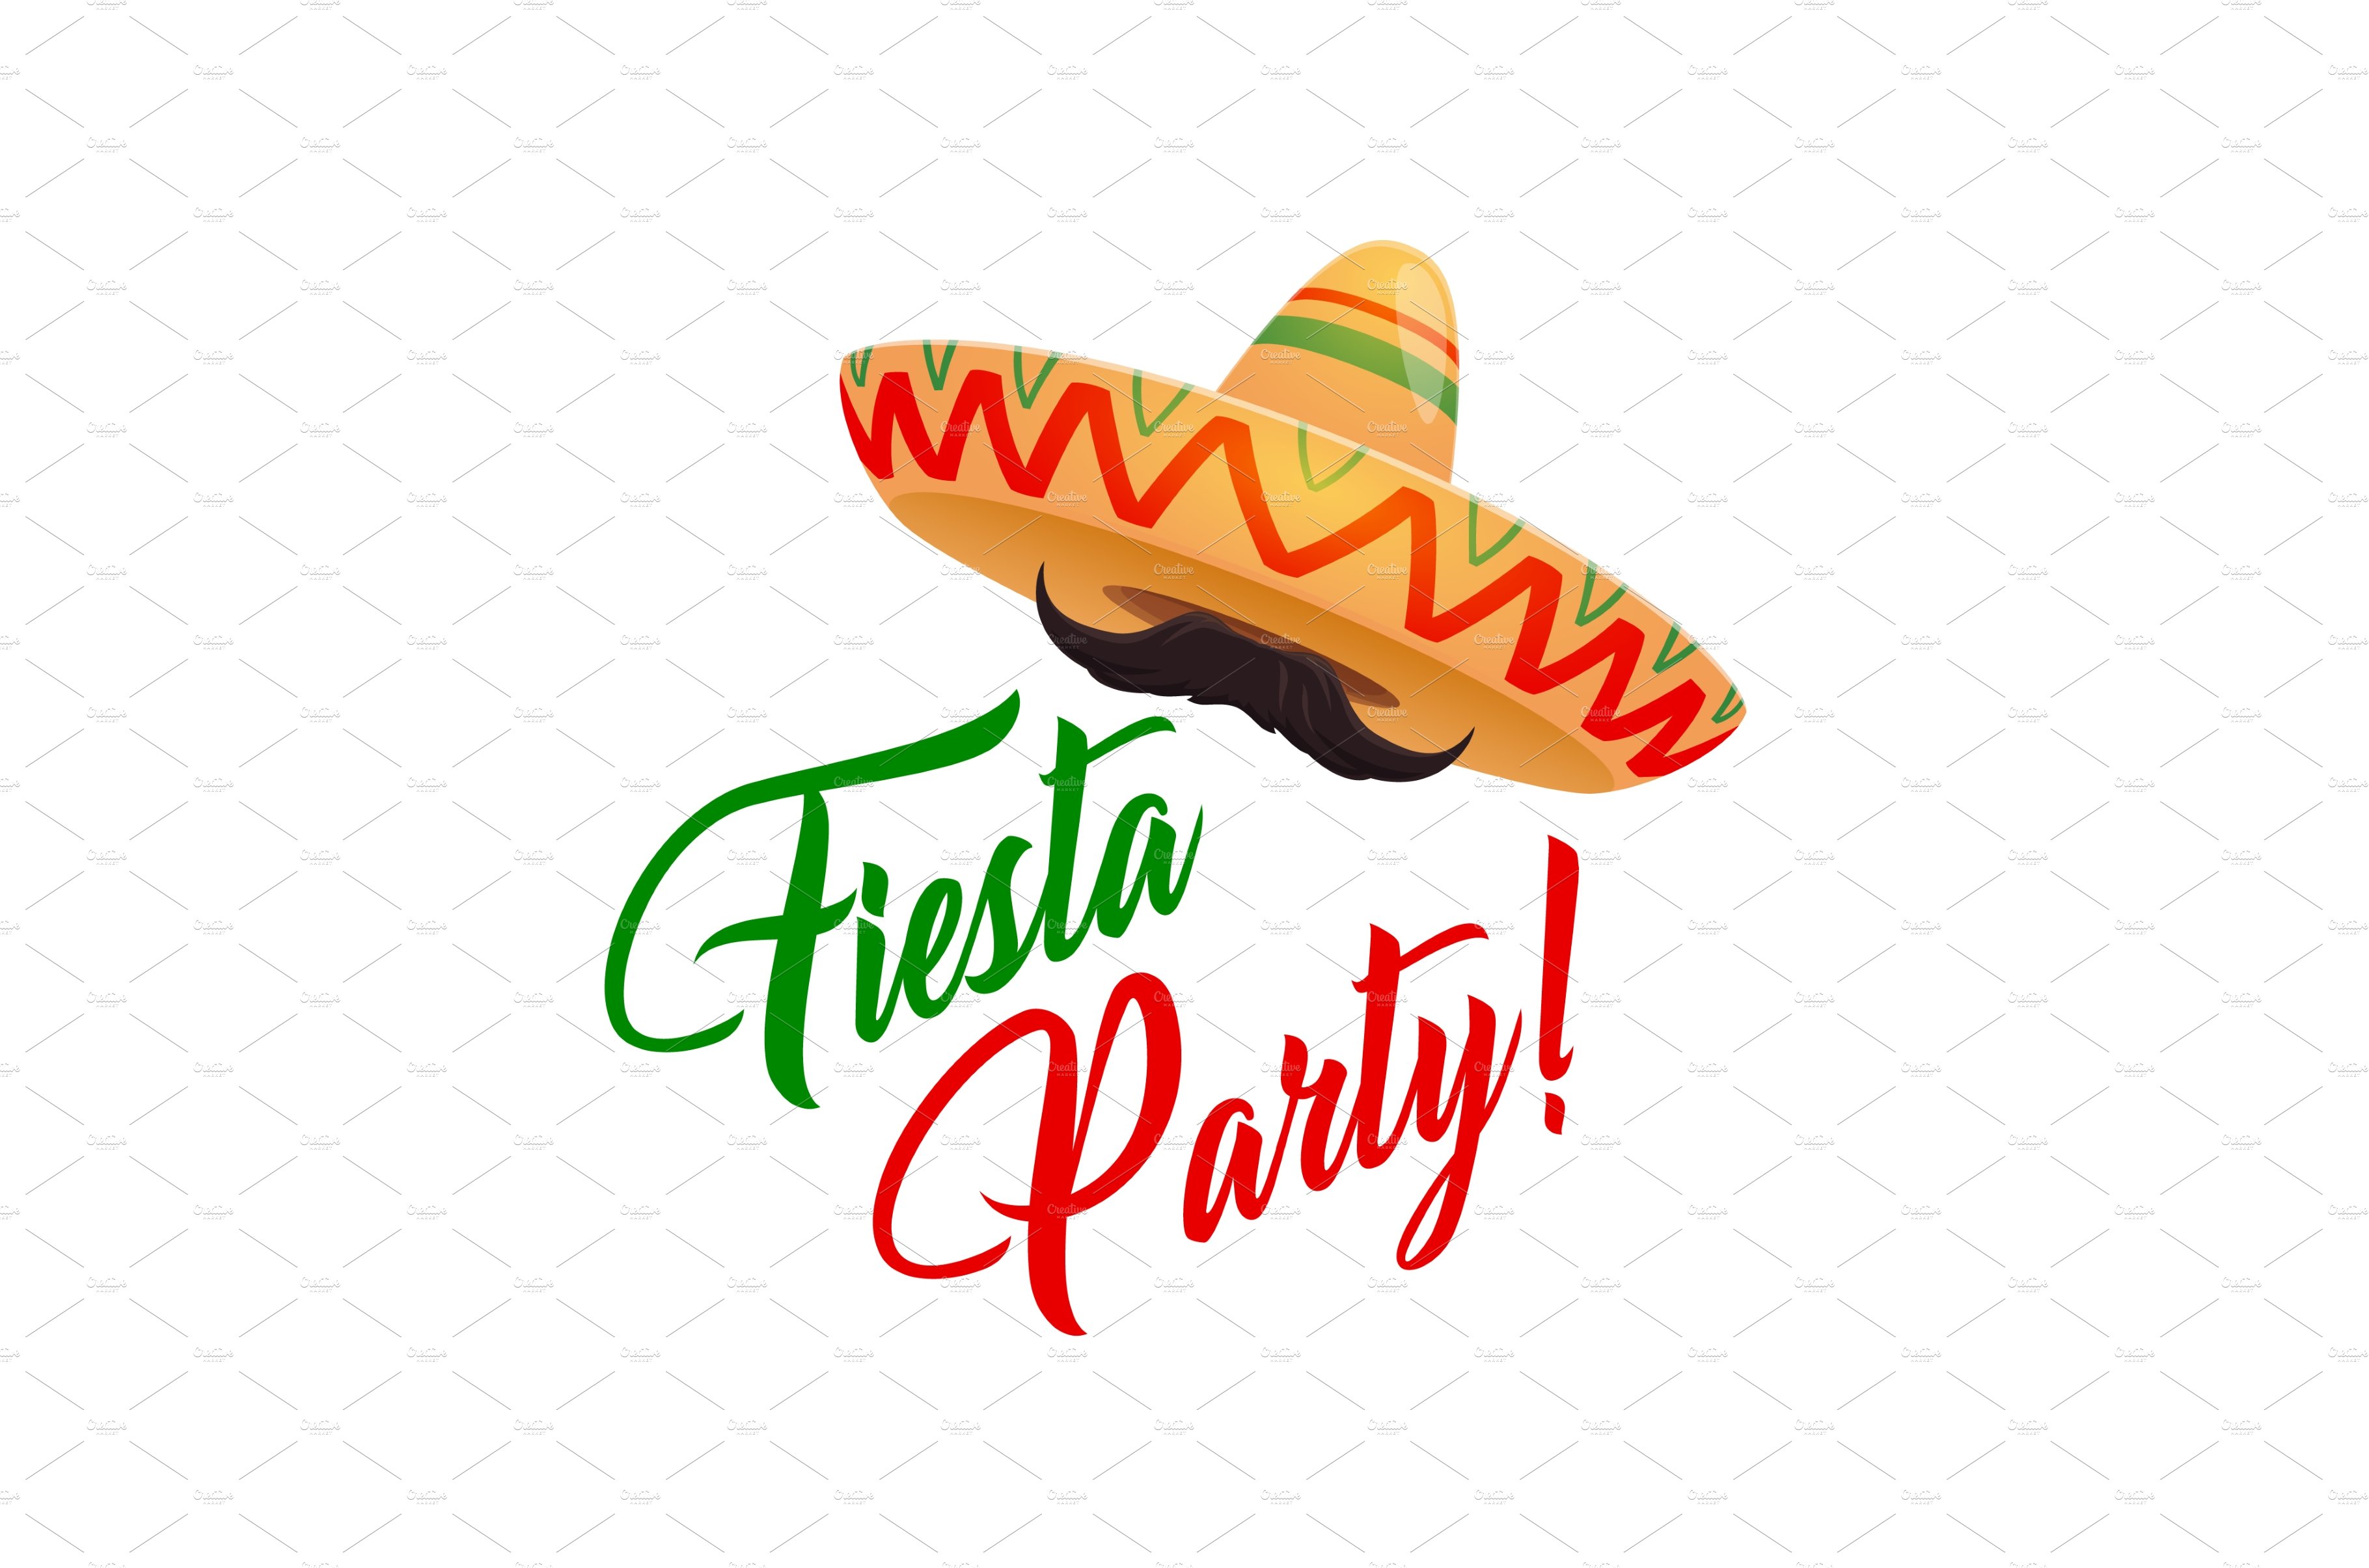 Fiesta party, Mexican sombrero cover image.